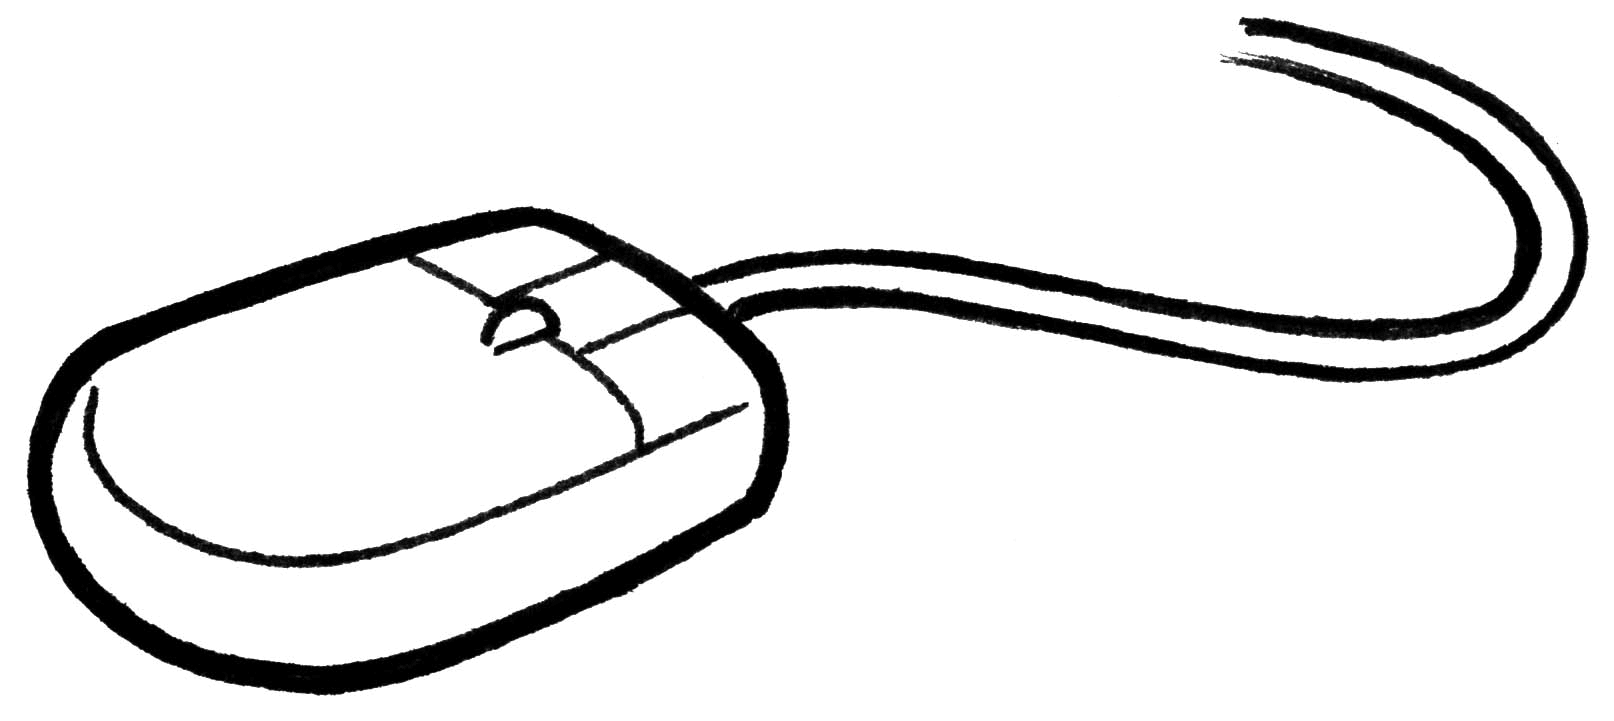 Pix For > Computer Mouse Clipart